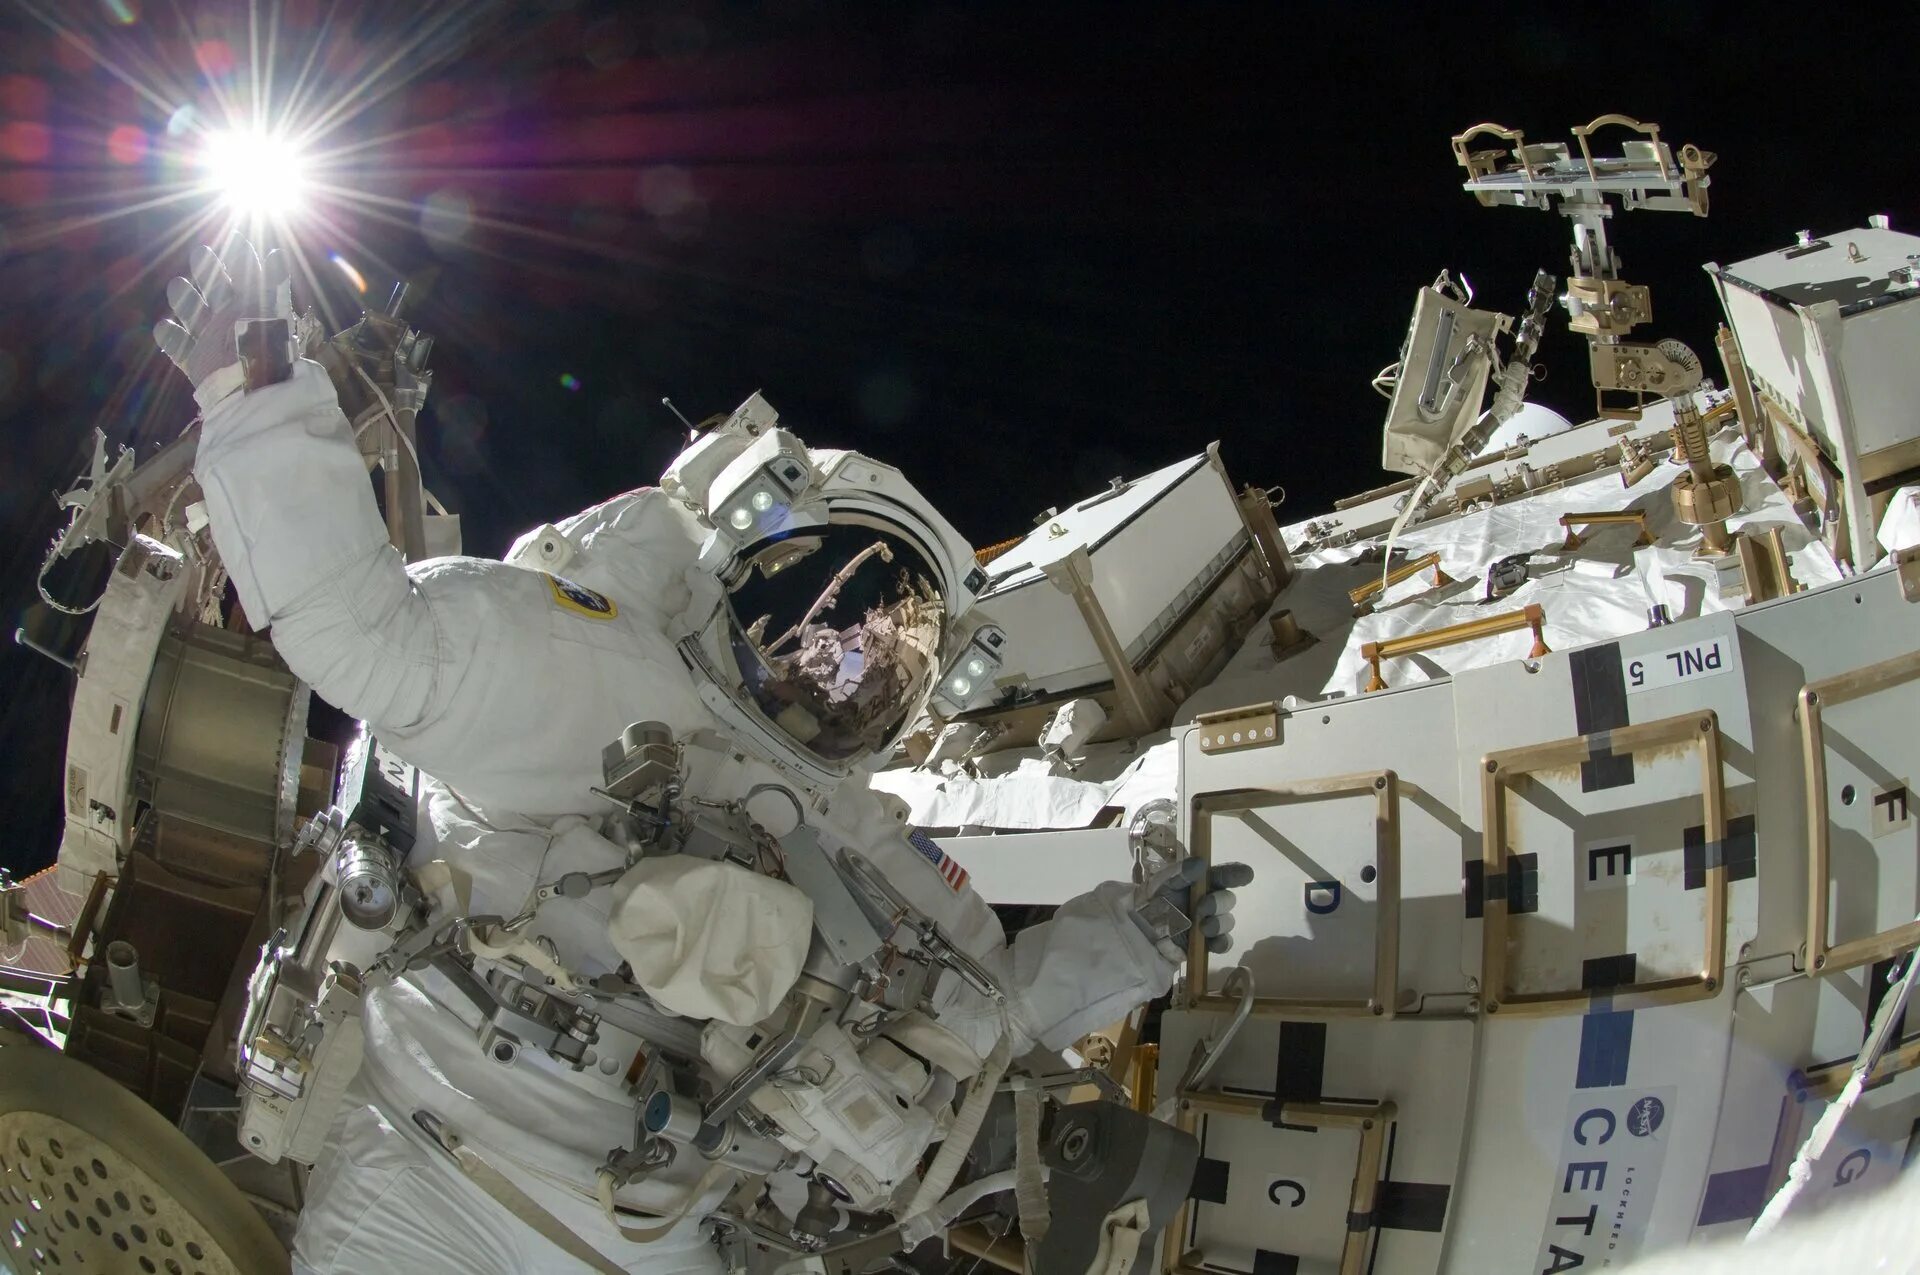 Астронавт НАСА Сунита Уильямс. Скафандры НАСА на МКС. Спутник НАСА станция МКС. Космонавт в космосе.